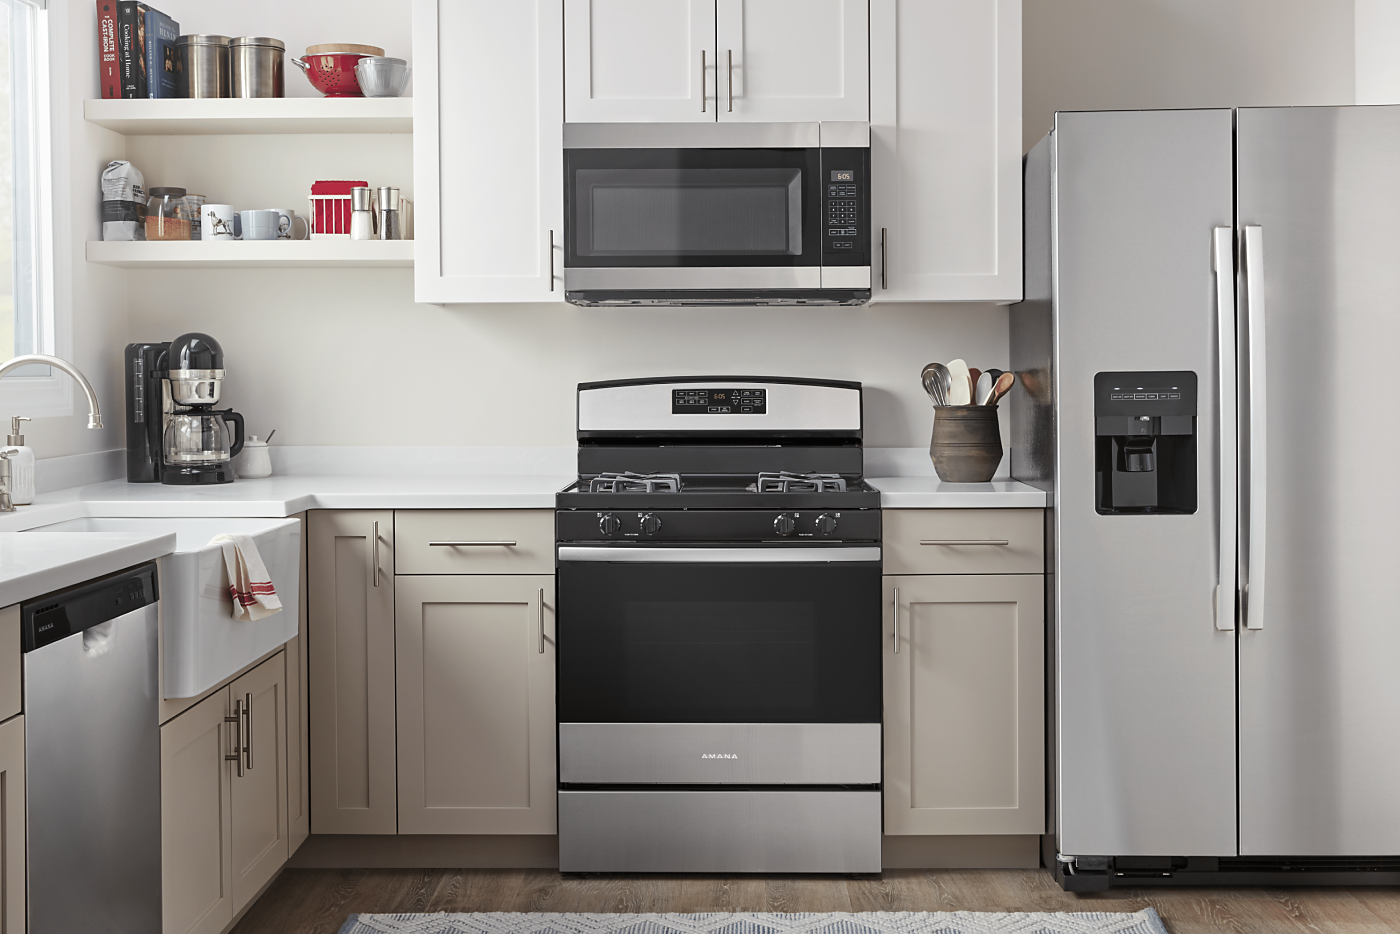  Amana® stainless steel kitchen appliances in a neutral kitchen